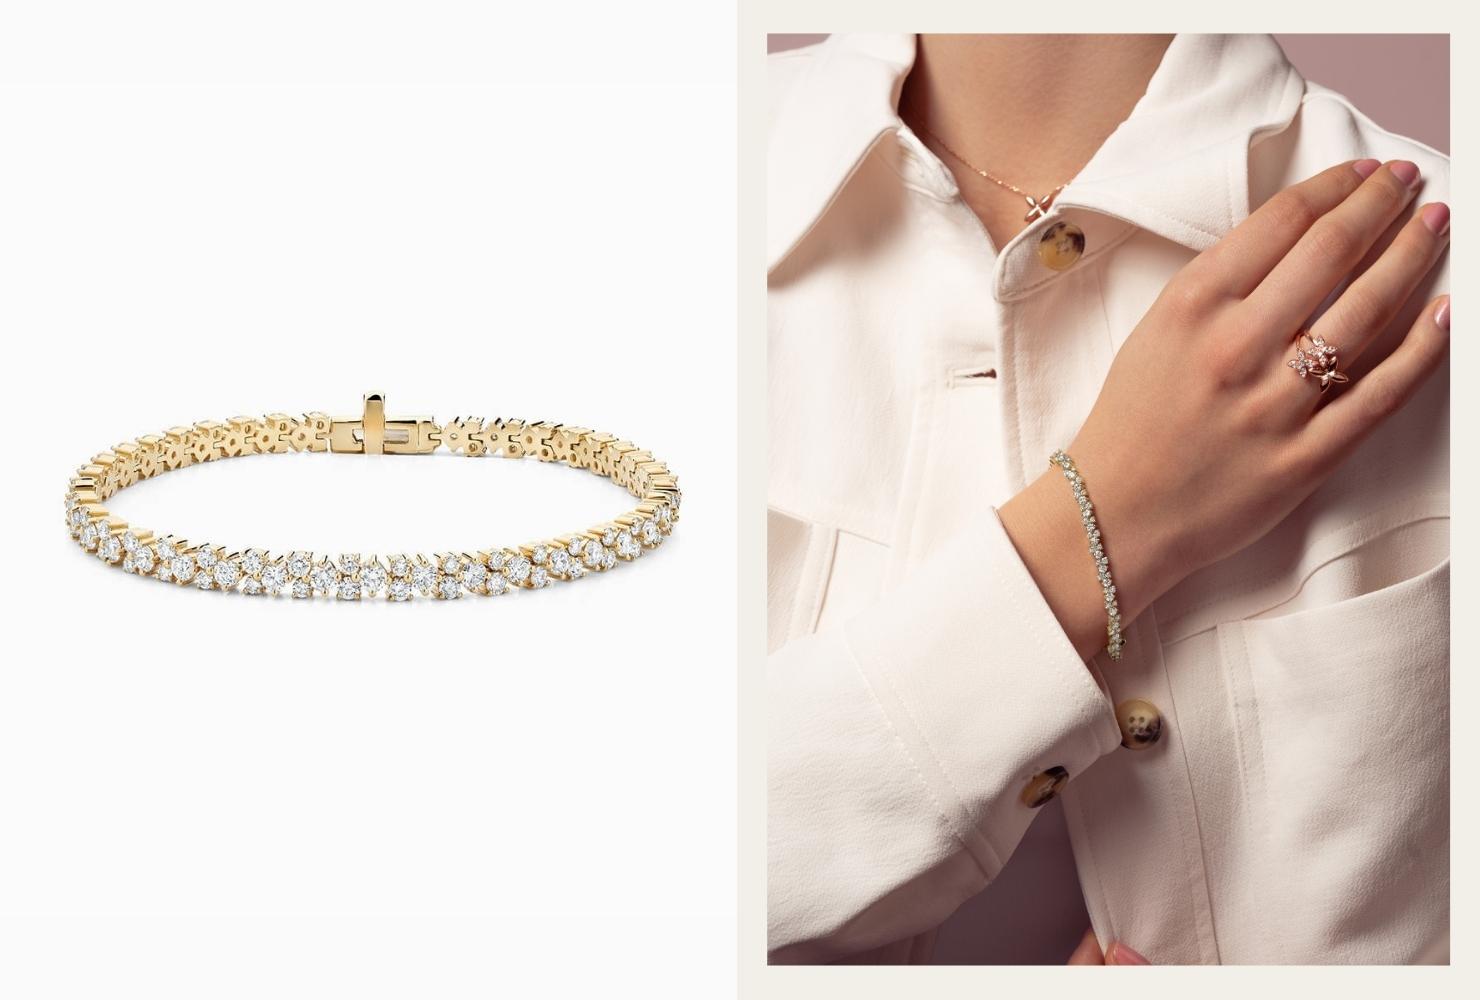 Image of Interlocking Diamond Tennis Bracelet next to an image of a model wearing it